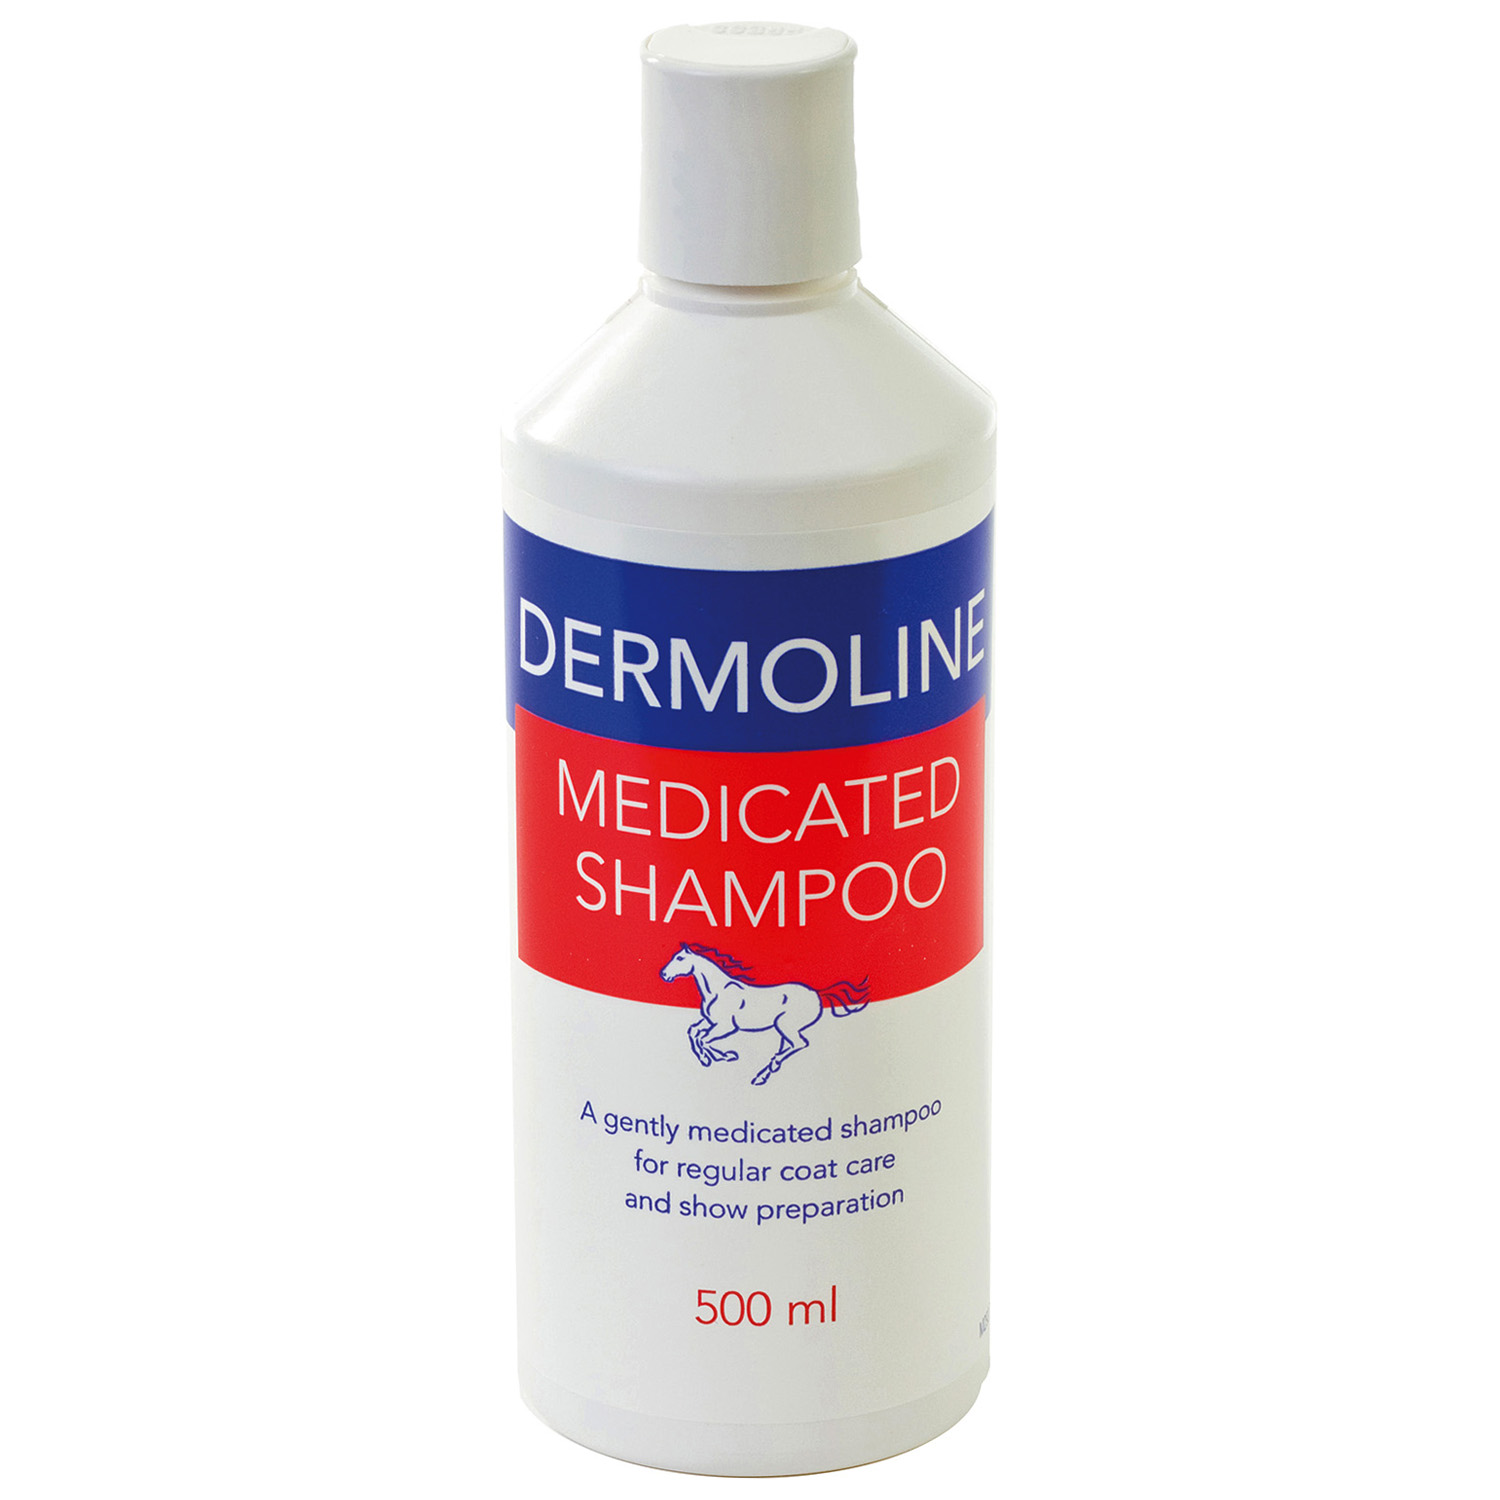 DERMOLINE MEDICATED SHAMPOO DERMOLINE MEDICATED SHAMPOO 500 ML  500 ML